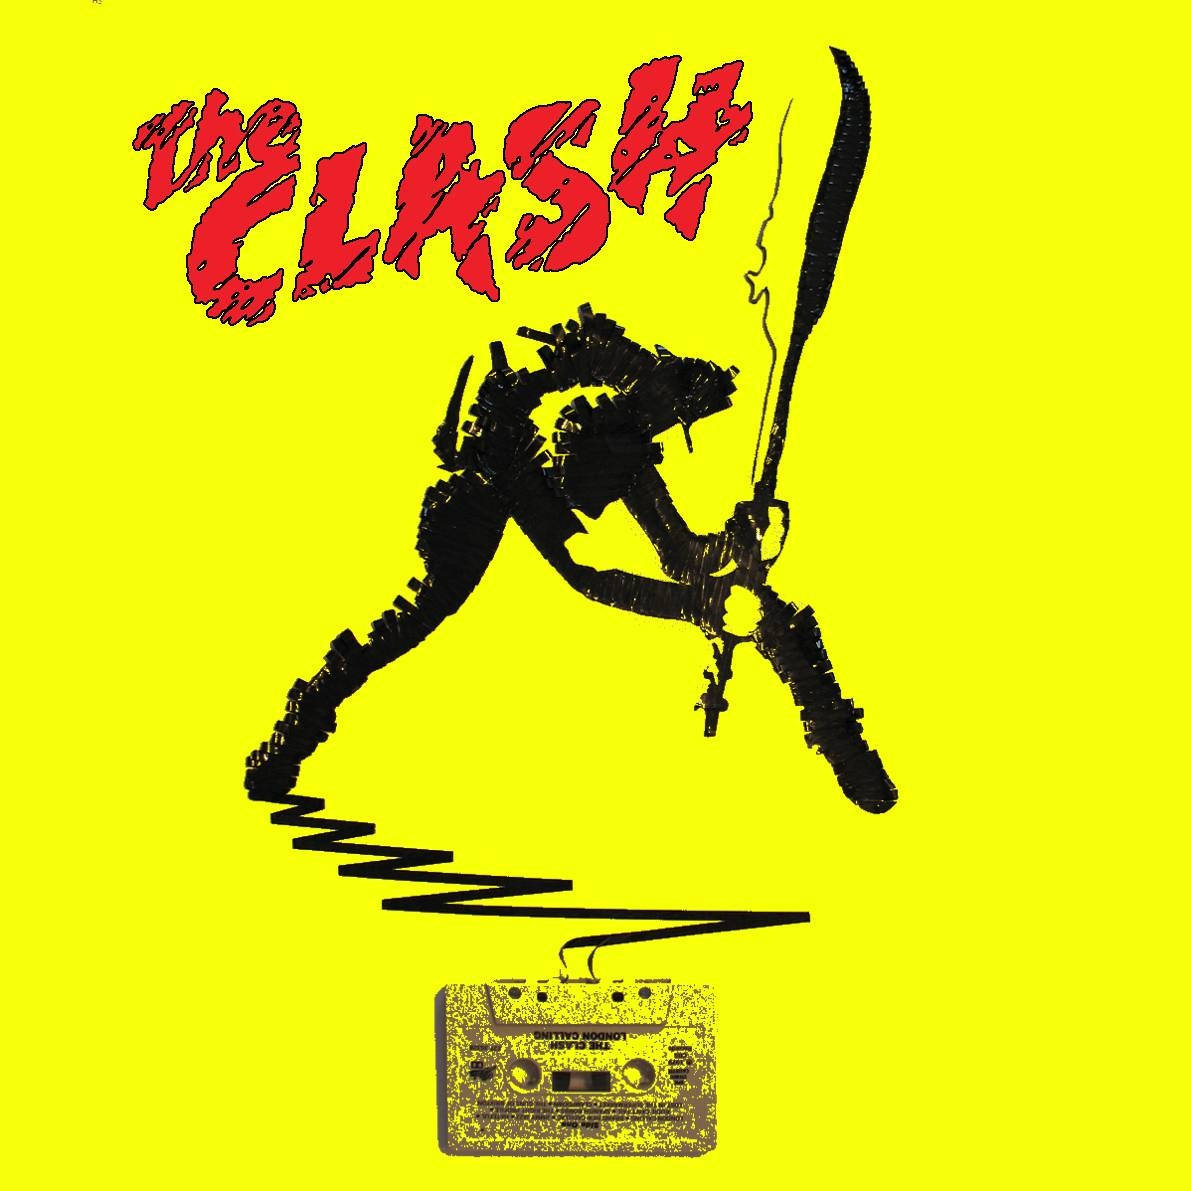 The Clash London Calling Album Cover Art Background